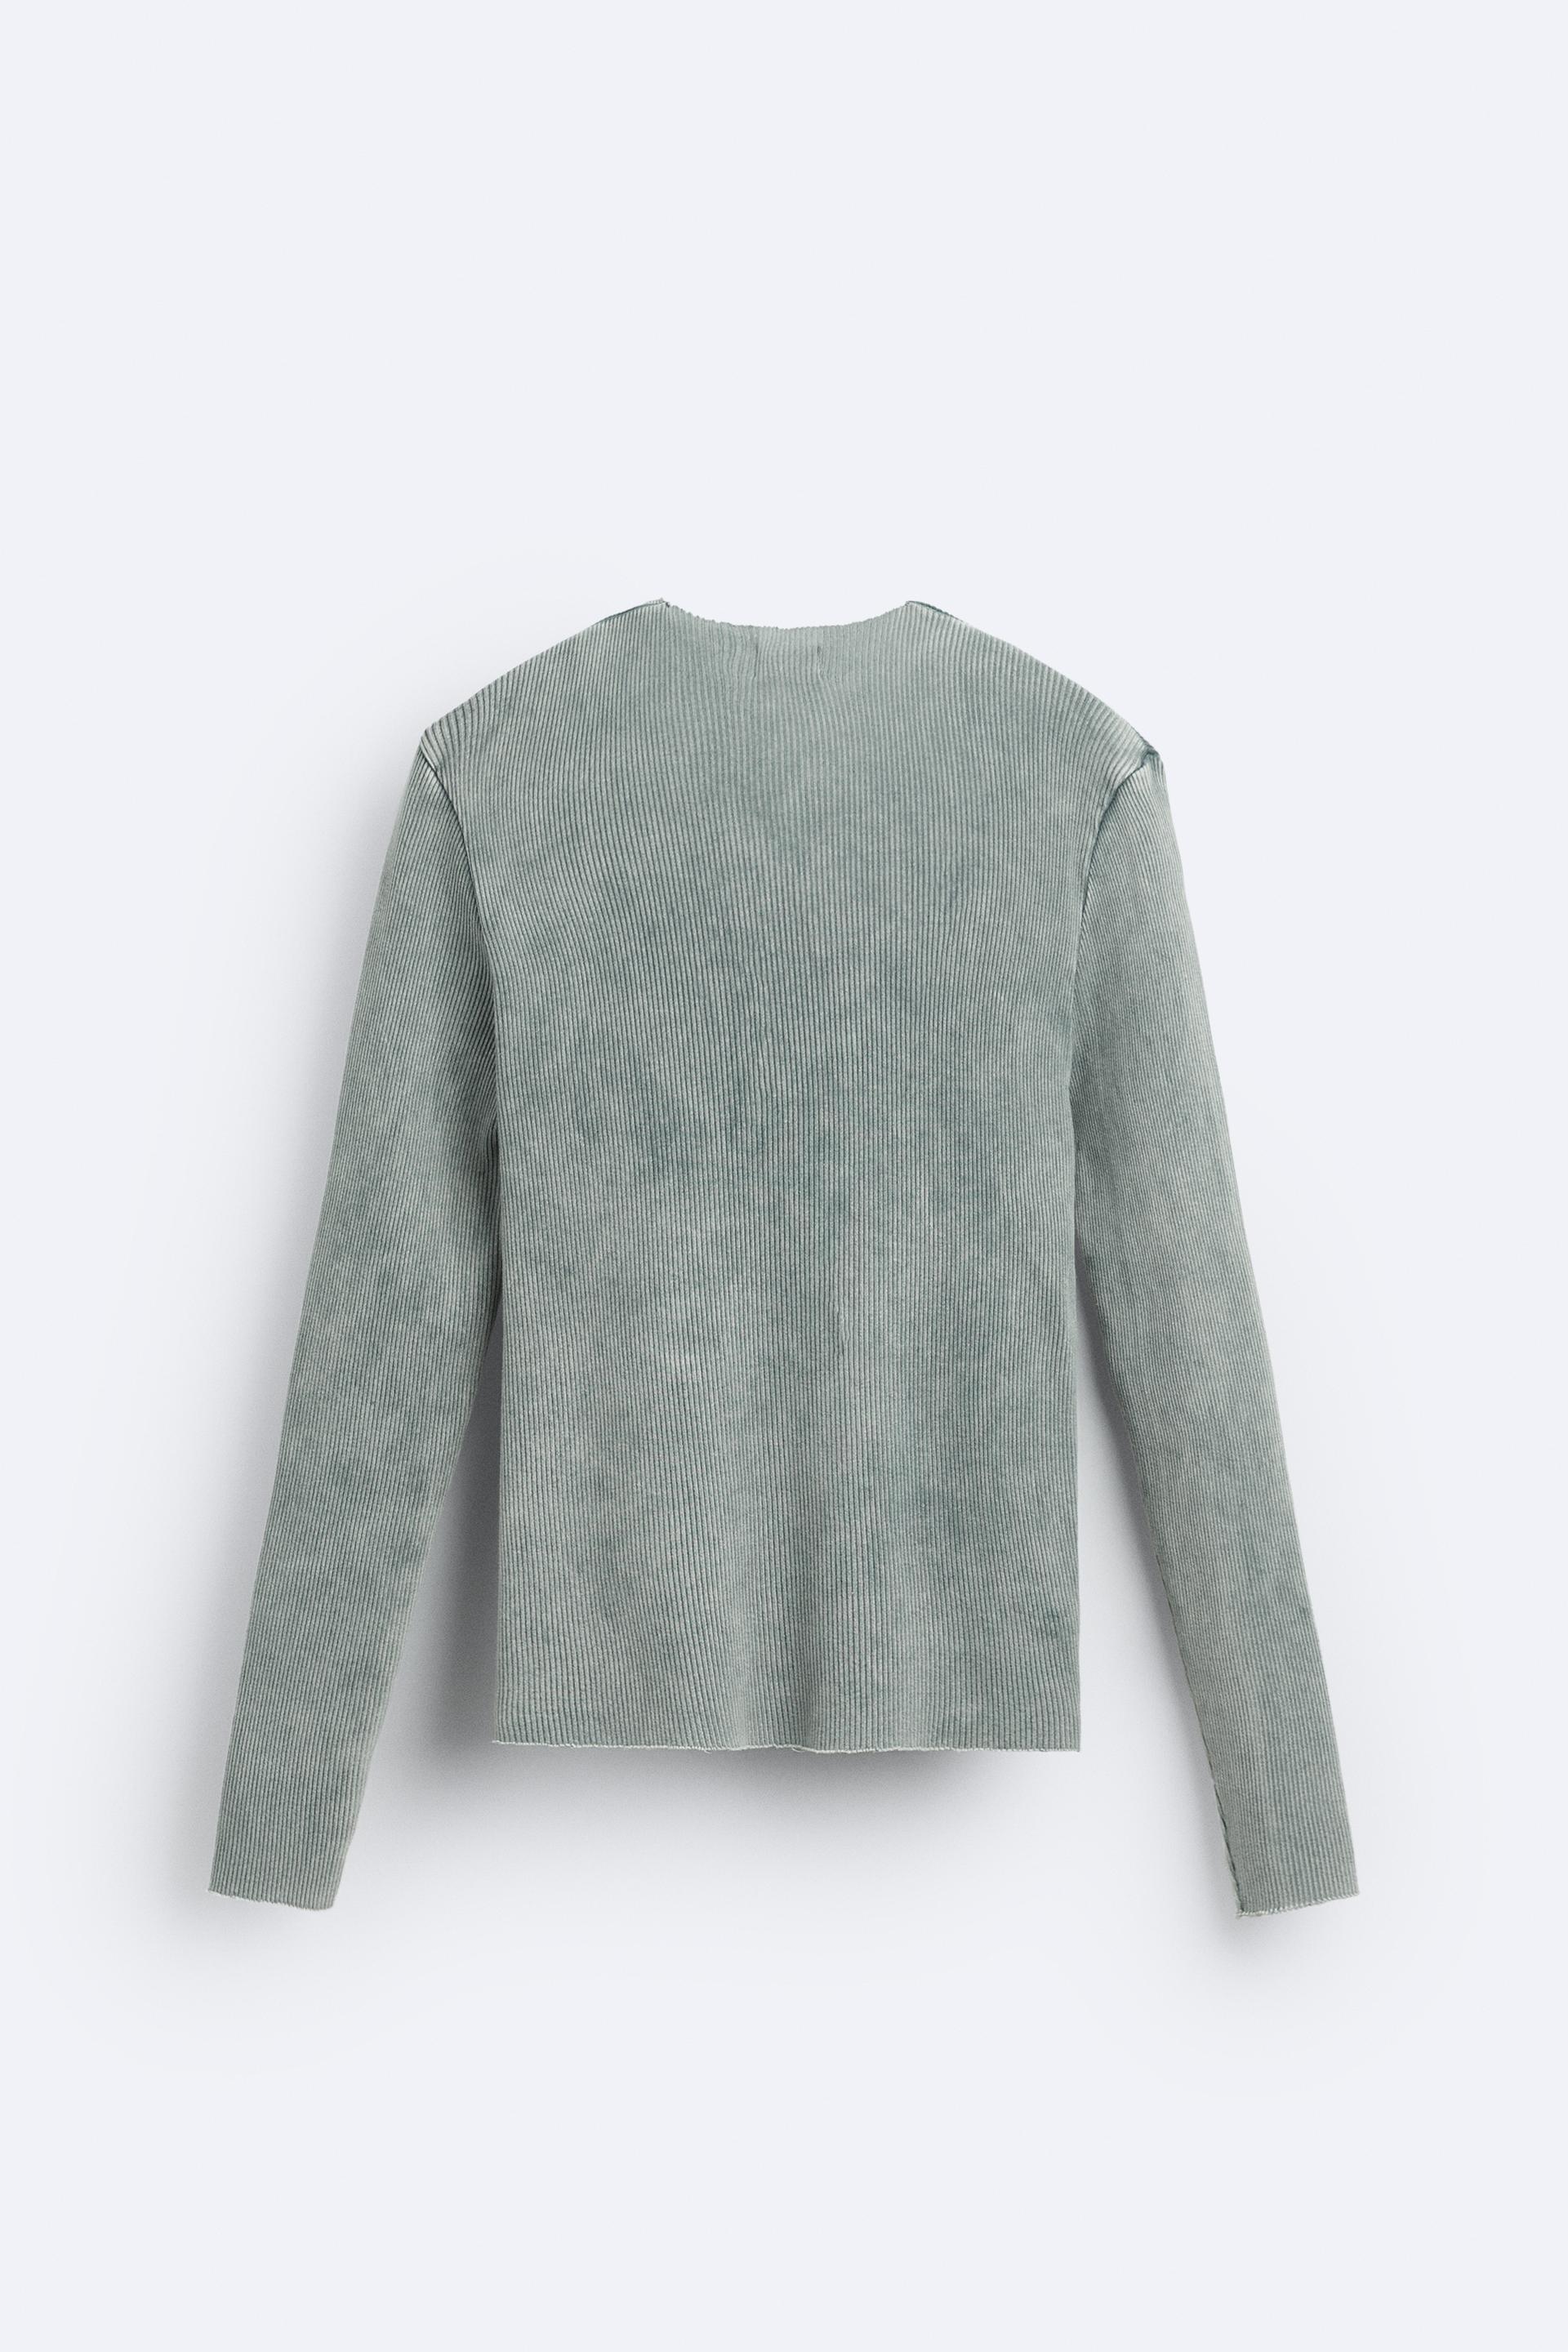 Zara Green Ribbed Knit Top, RegalFille